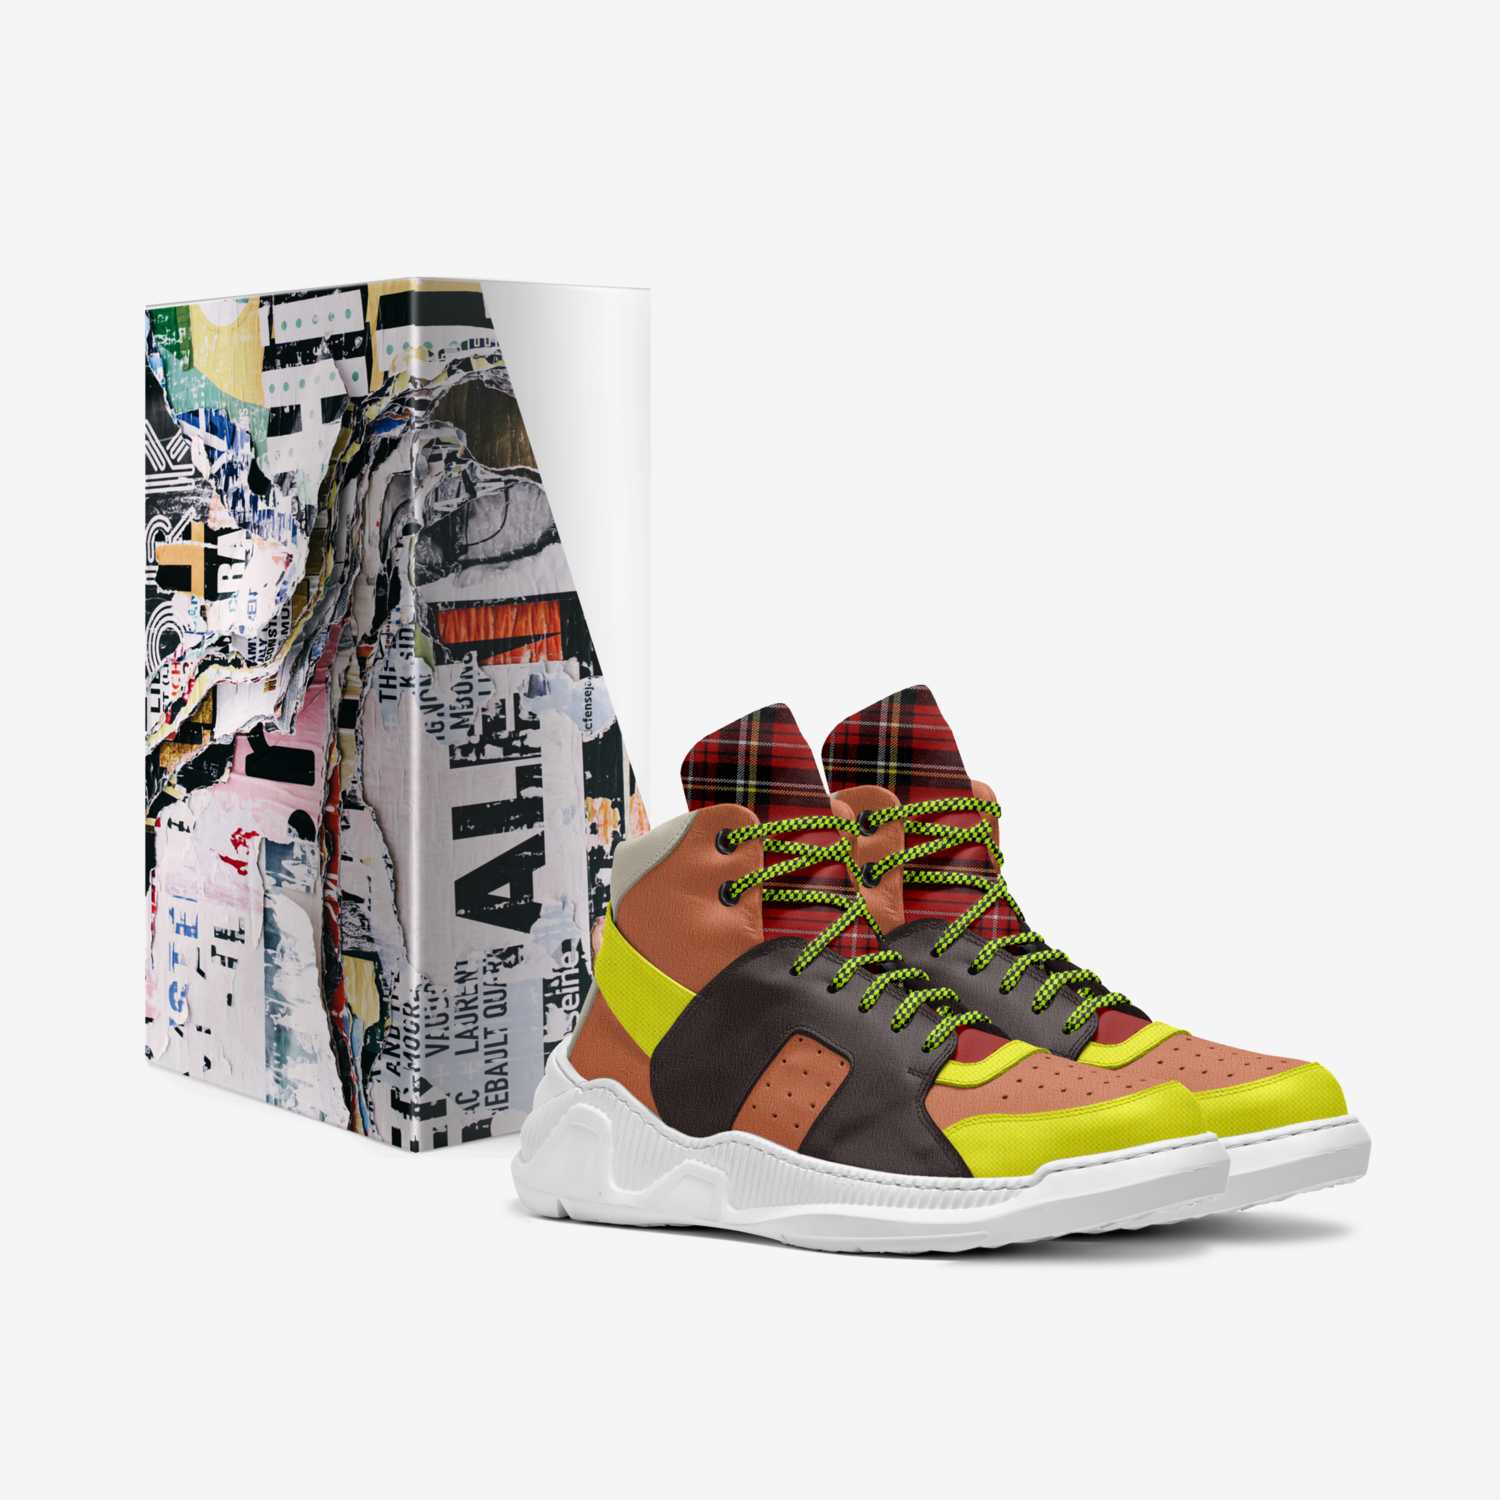 Alex Rocks custom made in Italy shoes by Nadejda Artiomenco | Box view